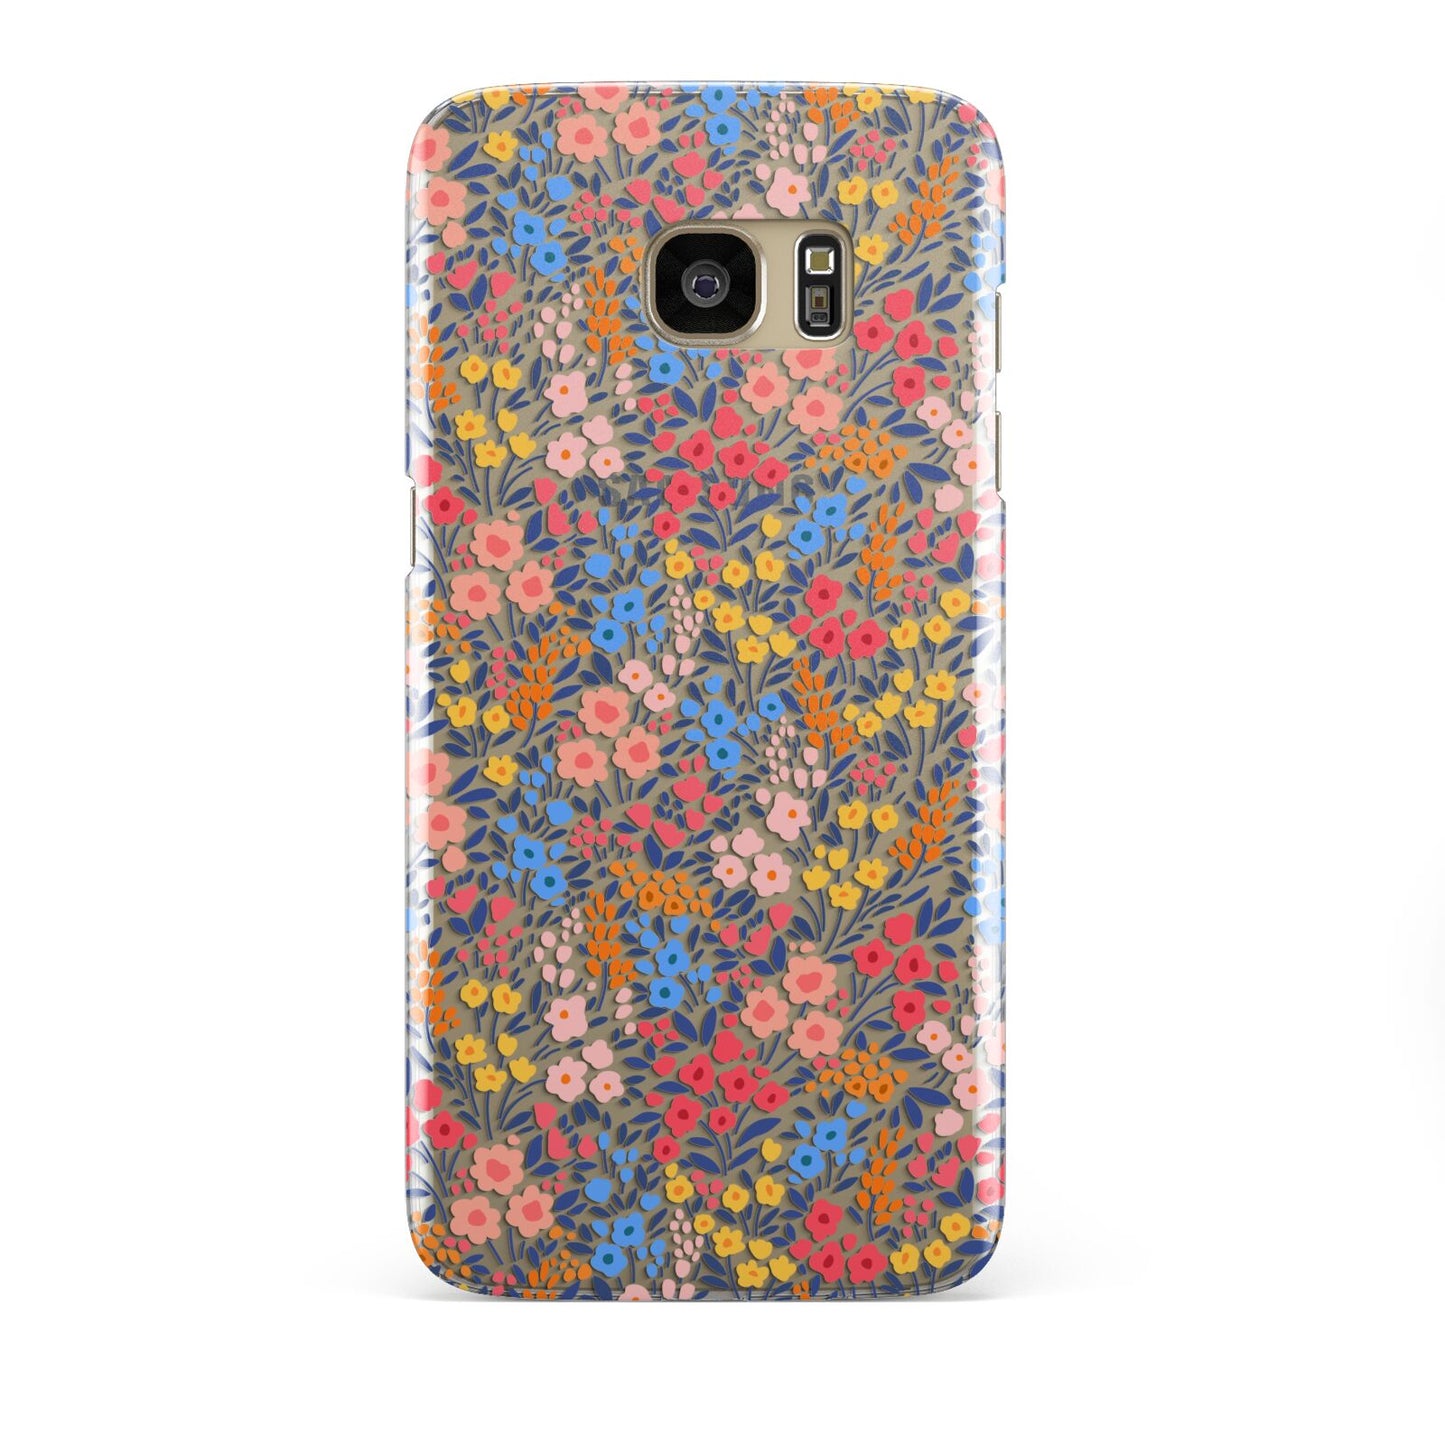 Small Flowers Samsung Galaxy S7 Edge Case